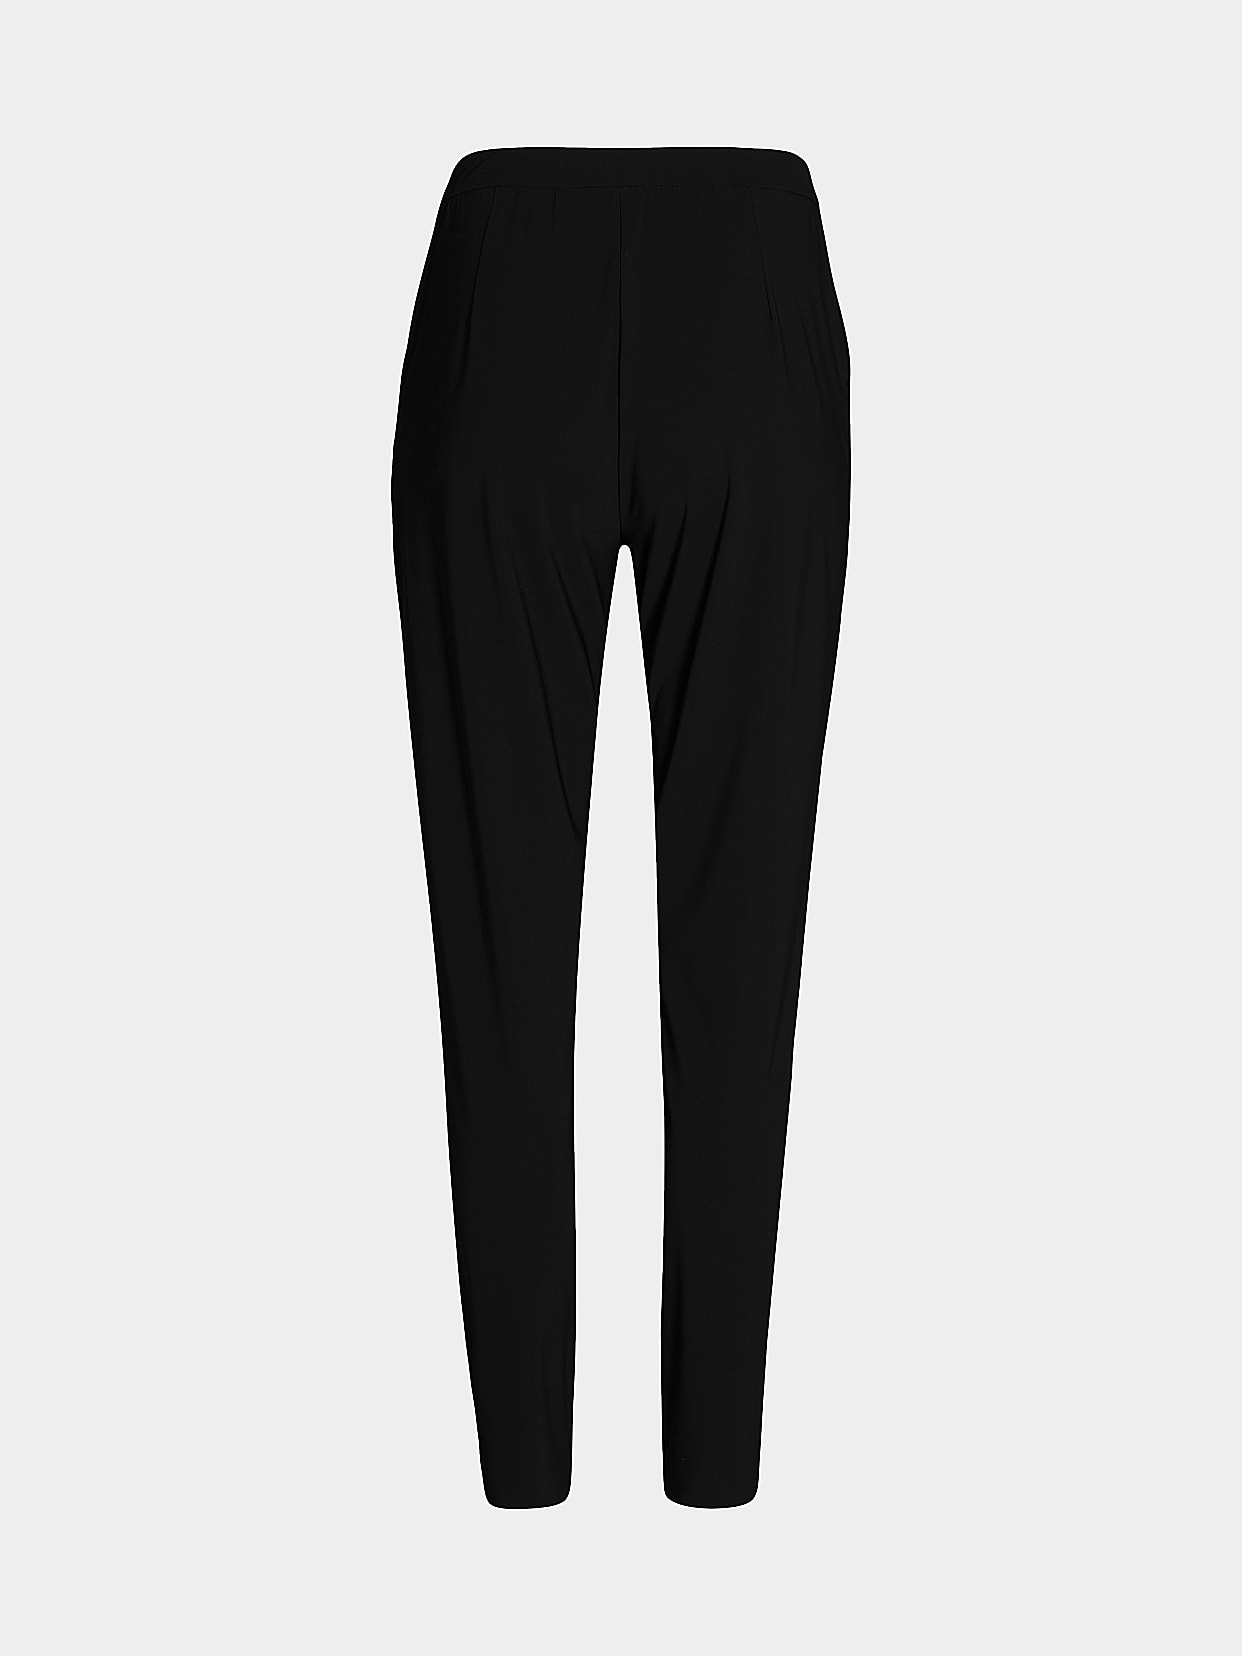 Calvin Klein Jeans Power Stretch Straight Leg Corduroy Pants Size 2 Plum  Color | eBay